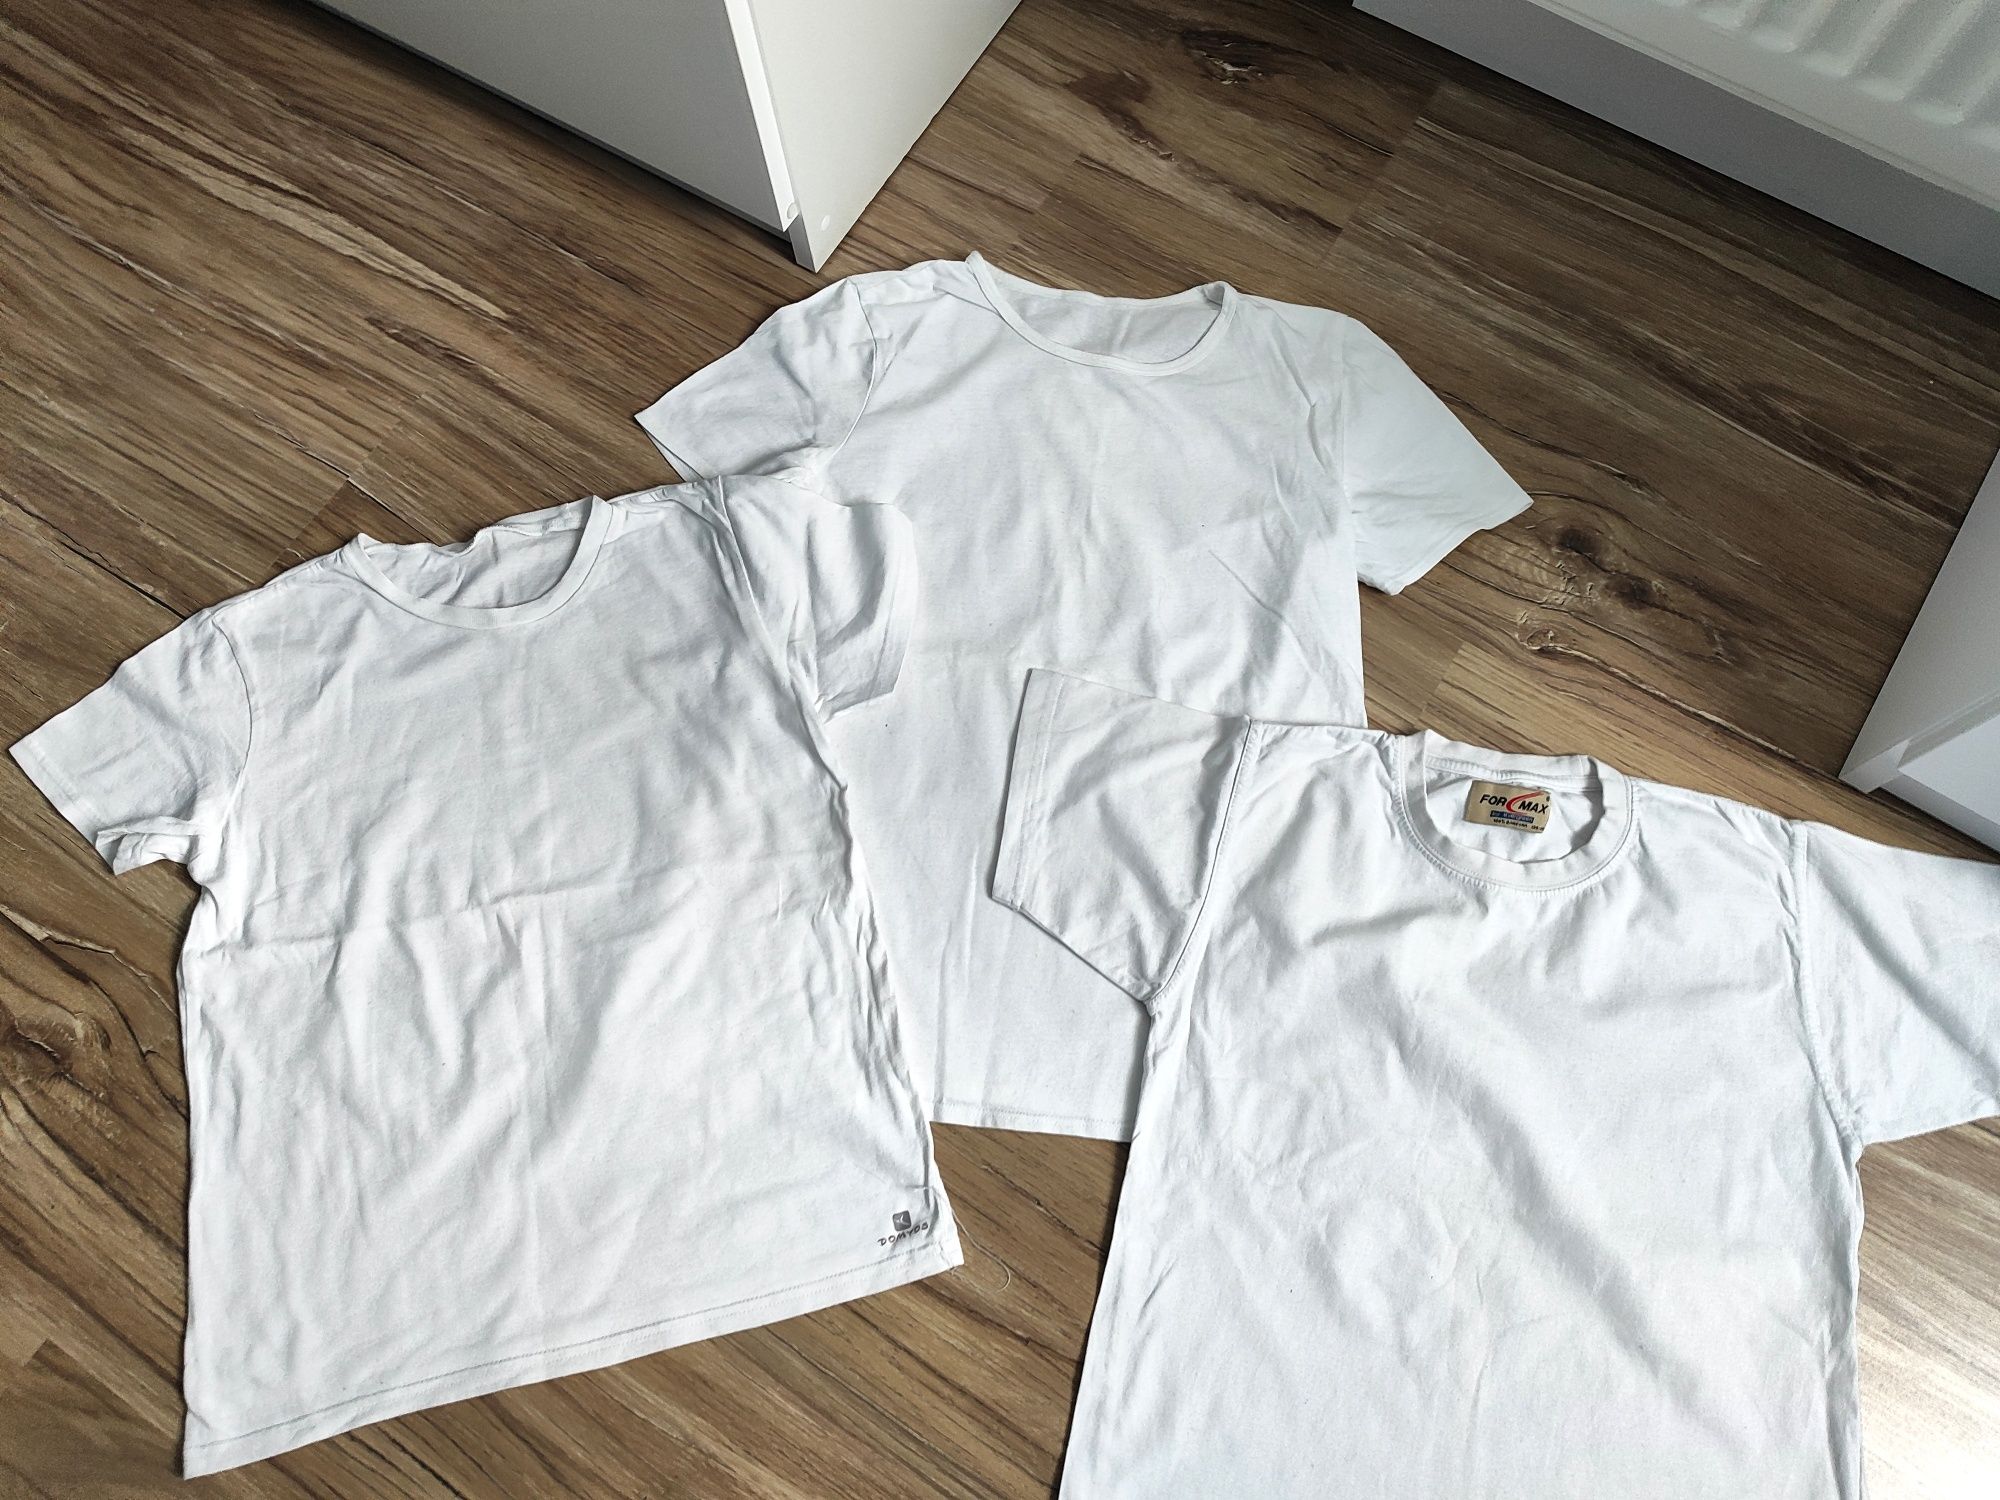 Zestaw wf 140 koszulka t-shirt